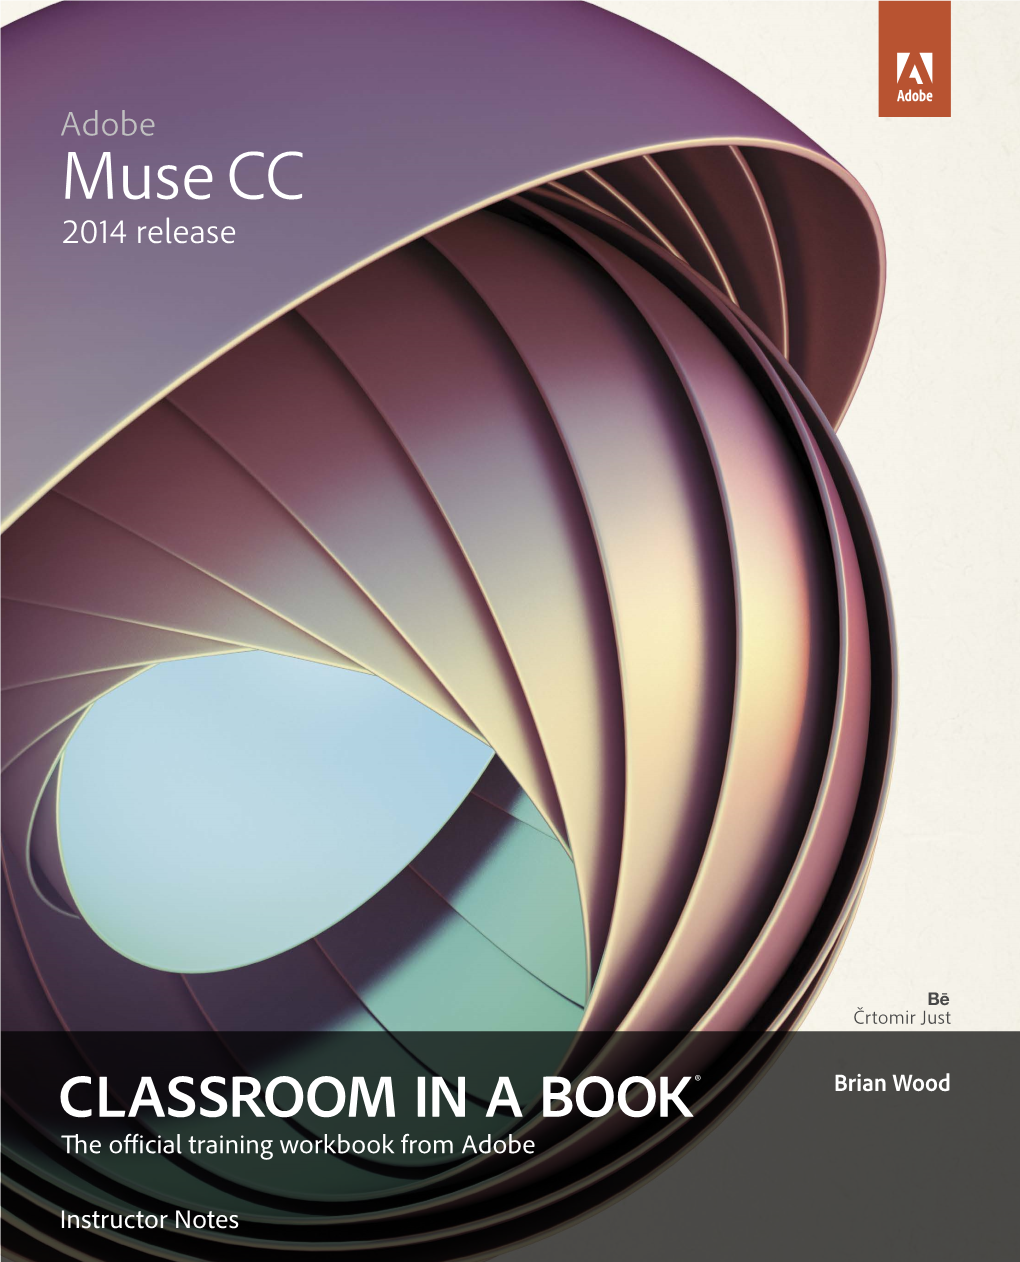 Adobe Muse CC 2014 Release